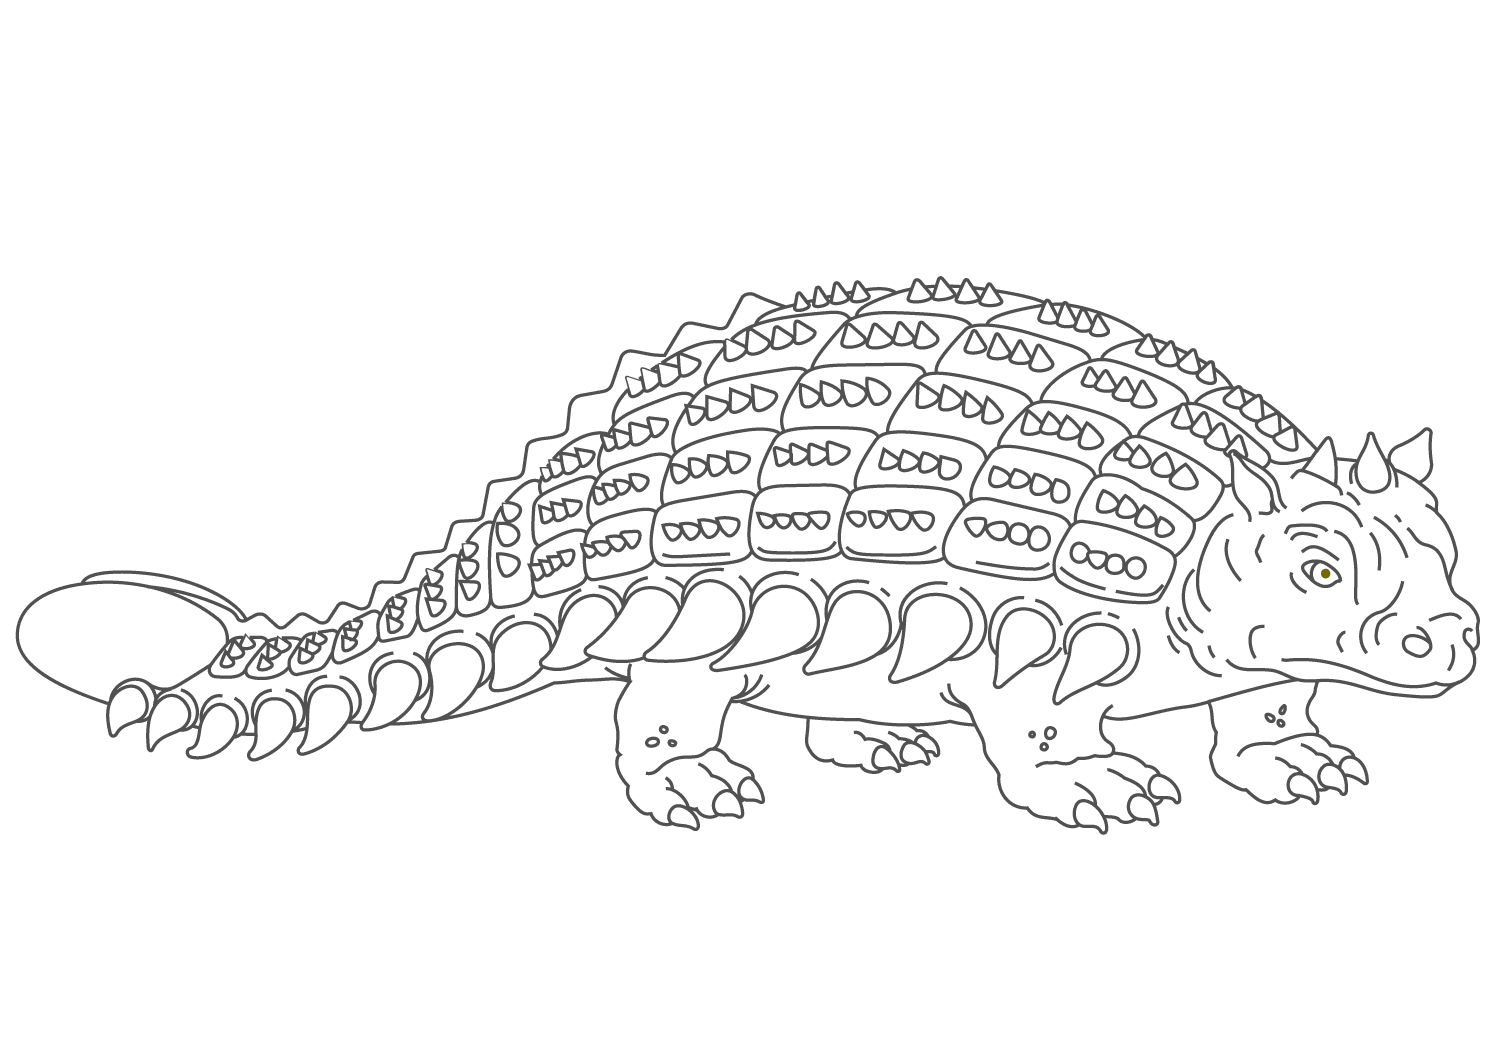 ankylosaurus coloring page free